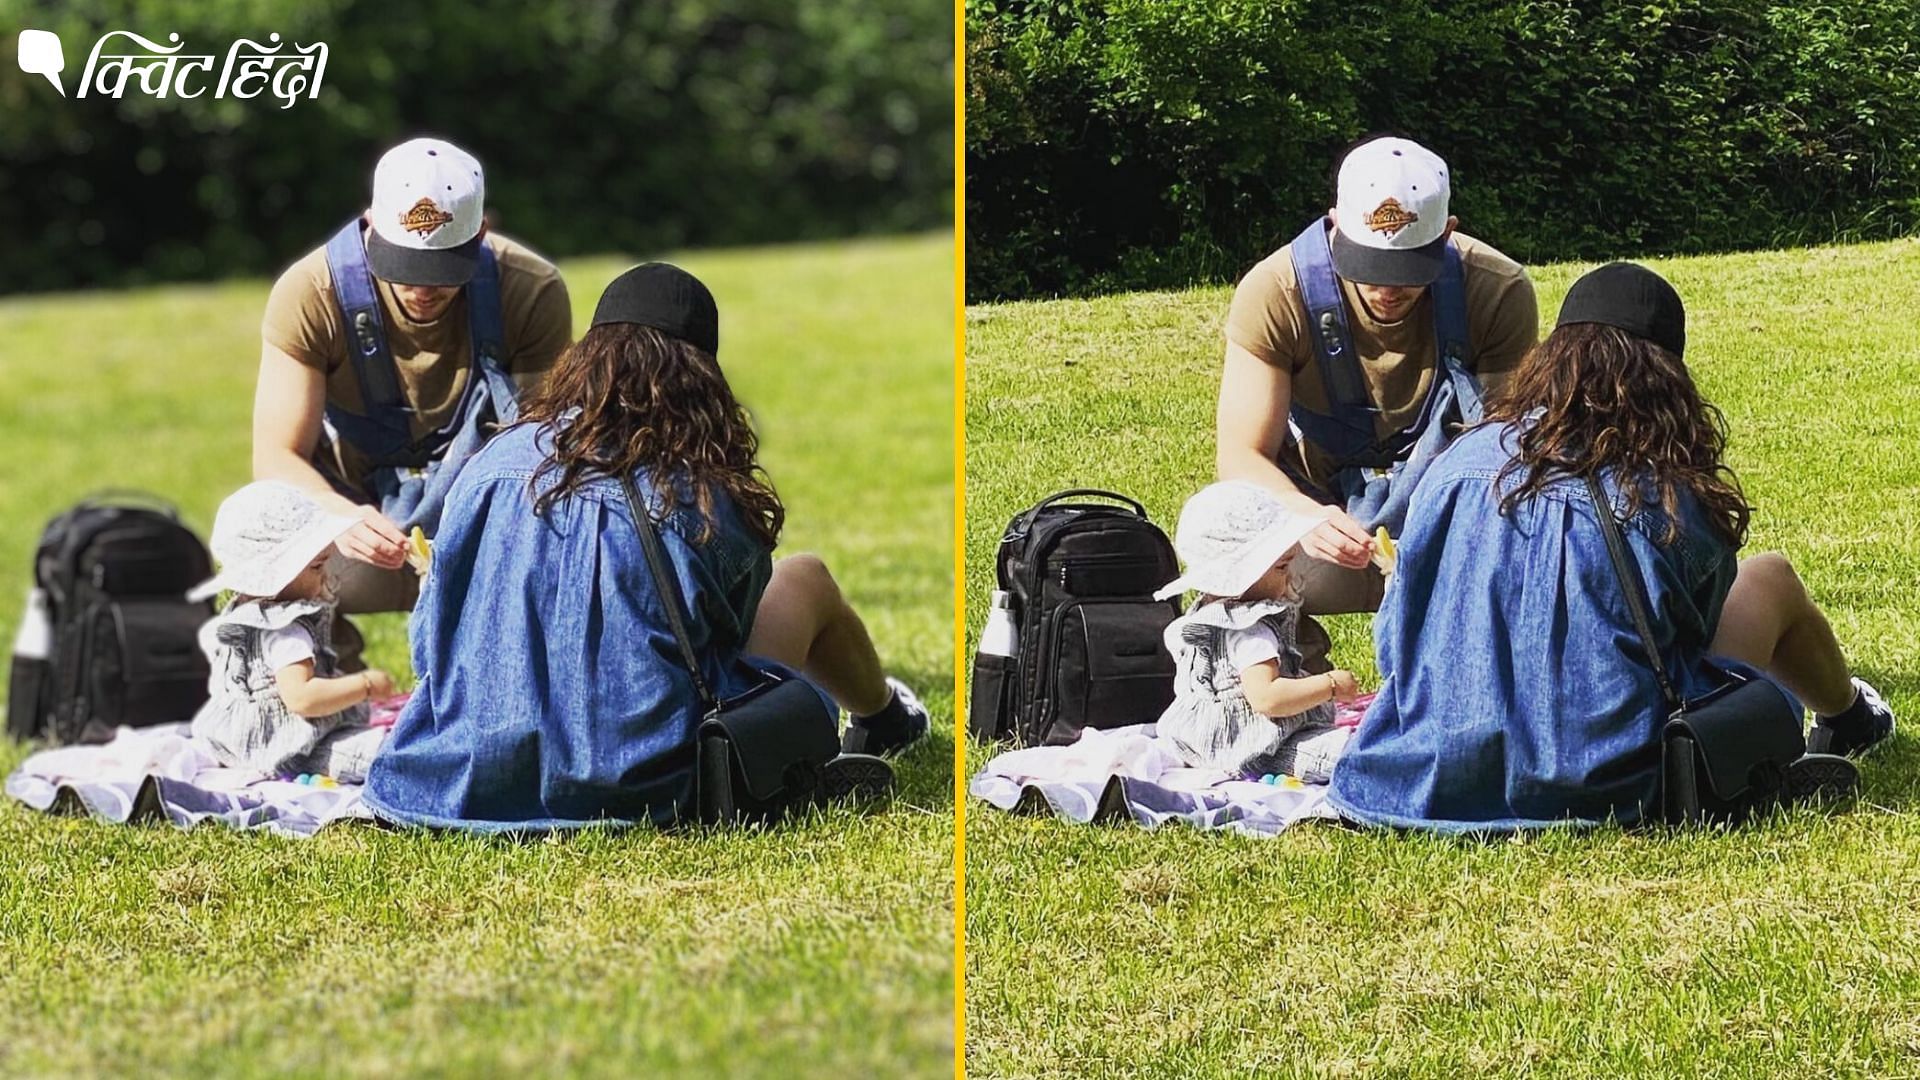 <div class="paragraphs"><p>Priyanka Chopra shares pictures Sunday picnic date with Malti Marie and Nick Jonas</p></div>